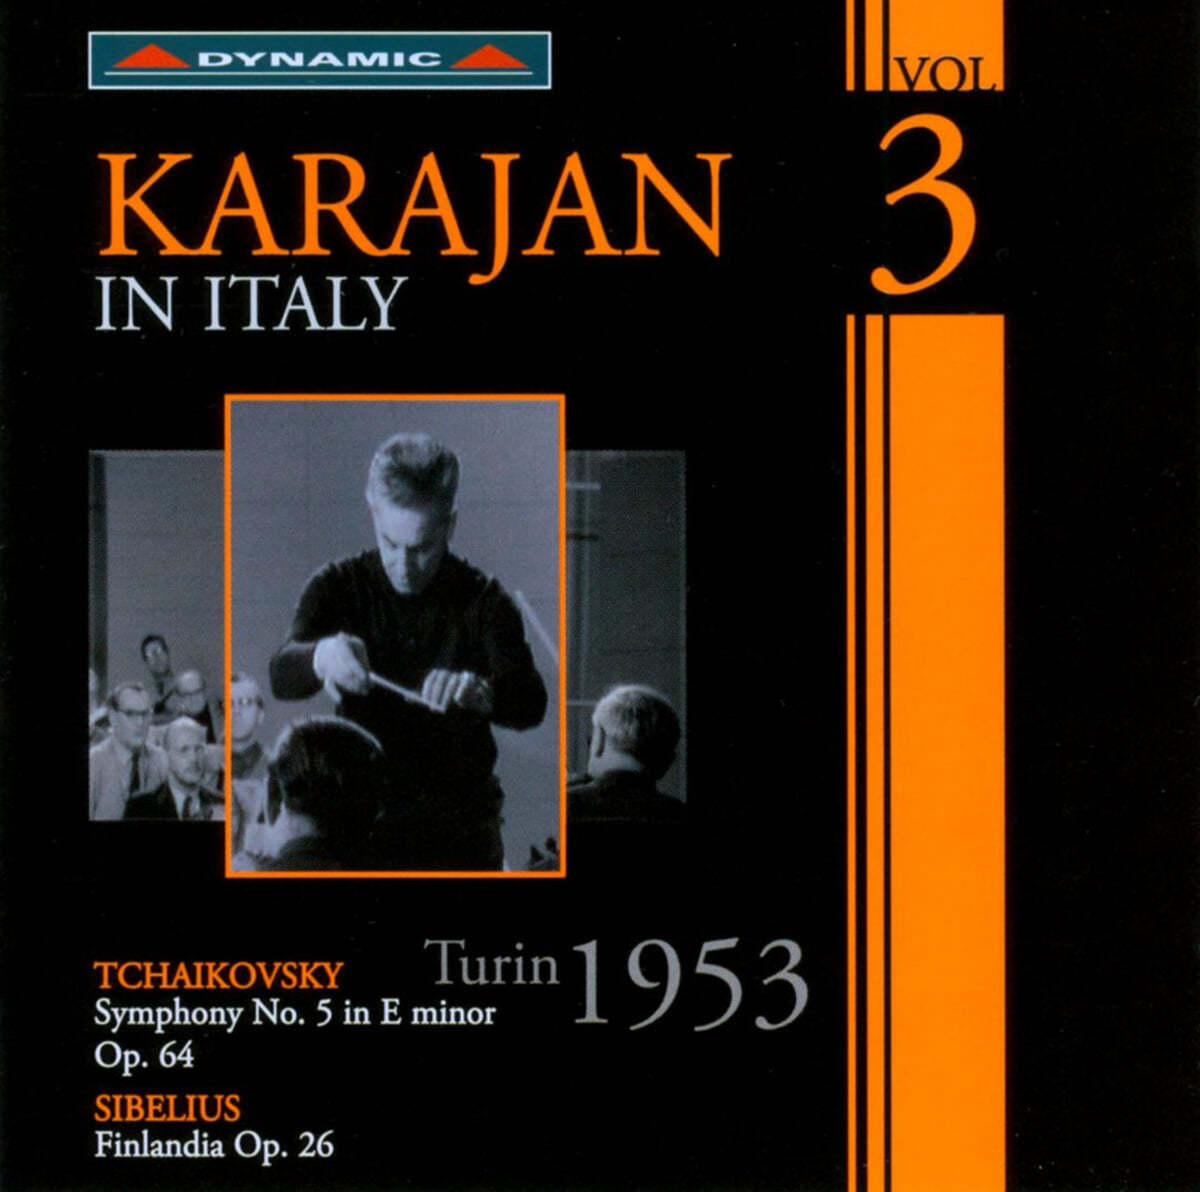 Herbert Von Karajan 차이코프스키: 교향곡 5번 / 시벨리우스: 핀란디아 (Karajan in Italy vol.3)